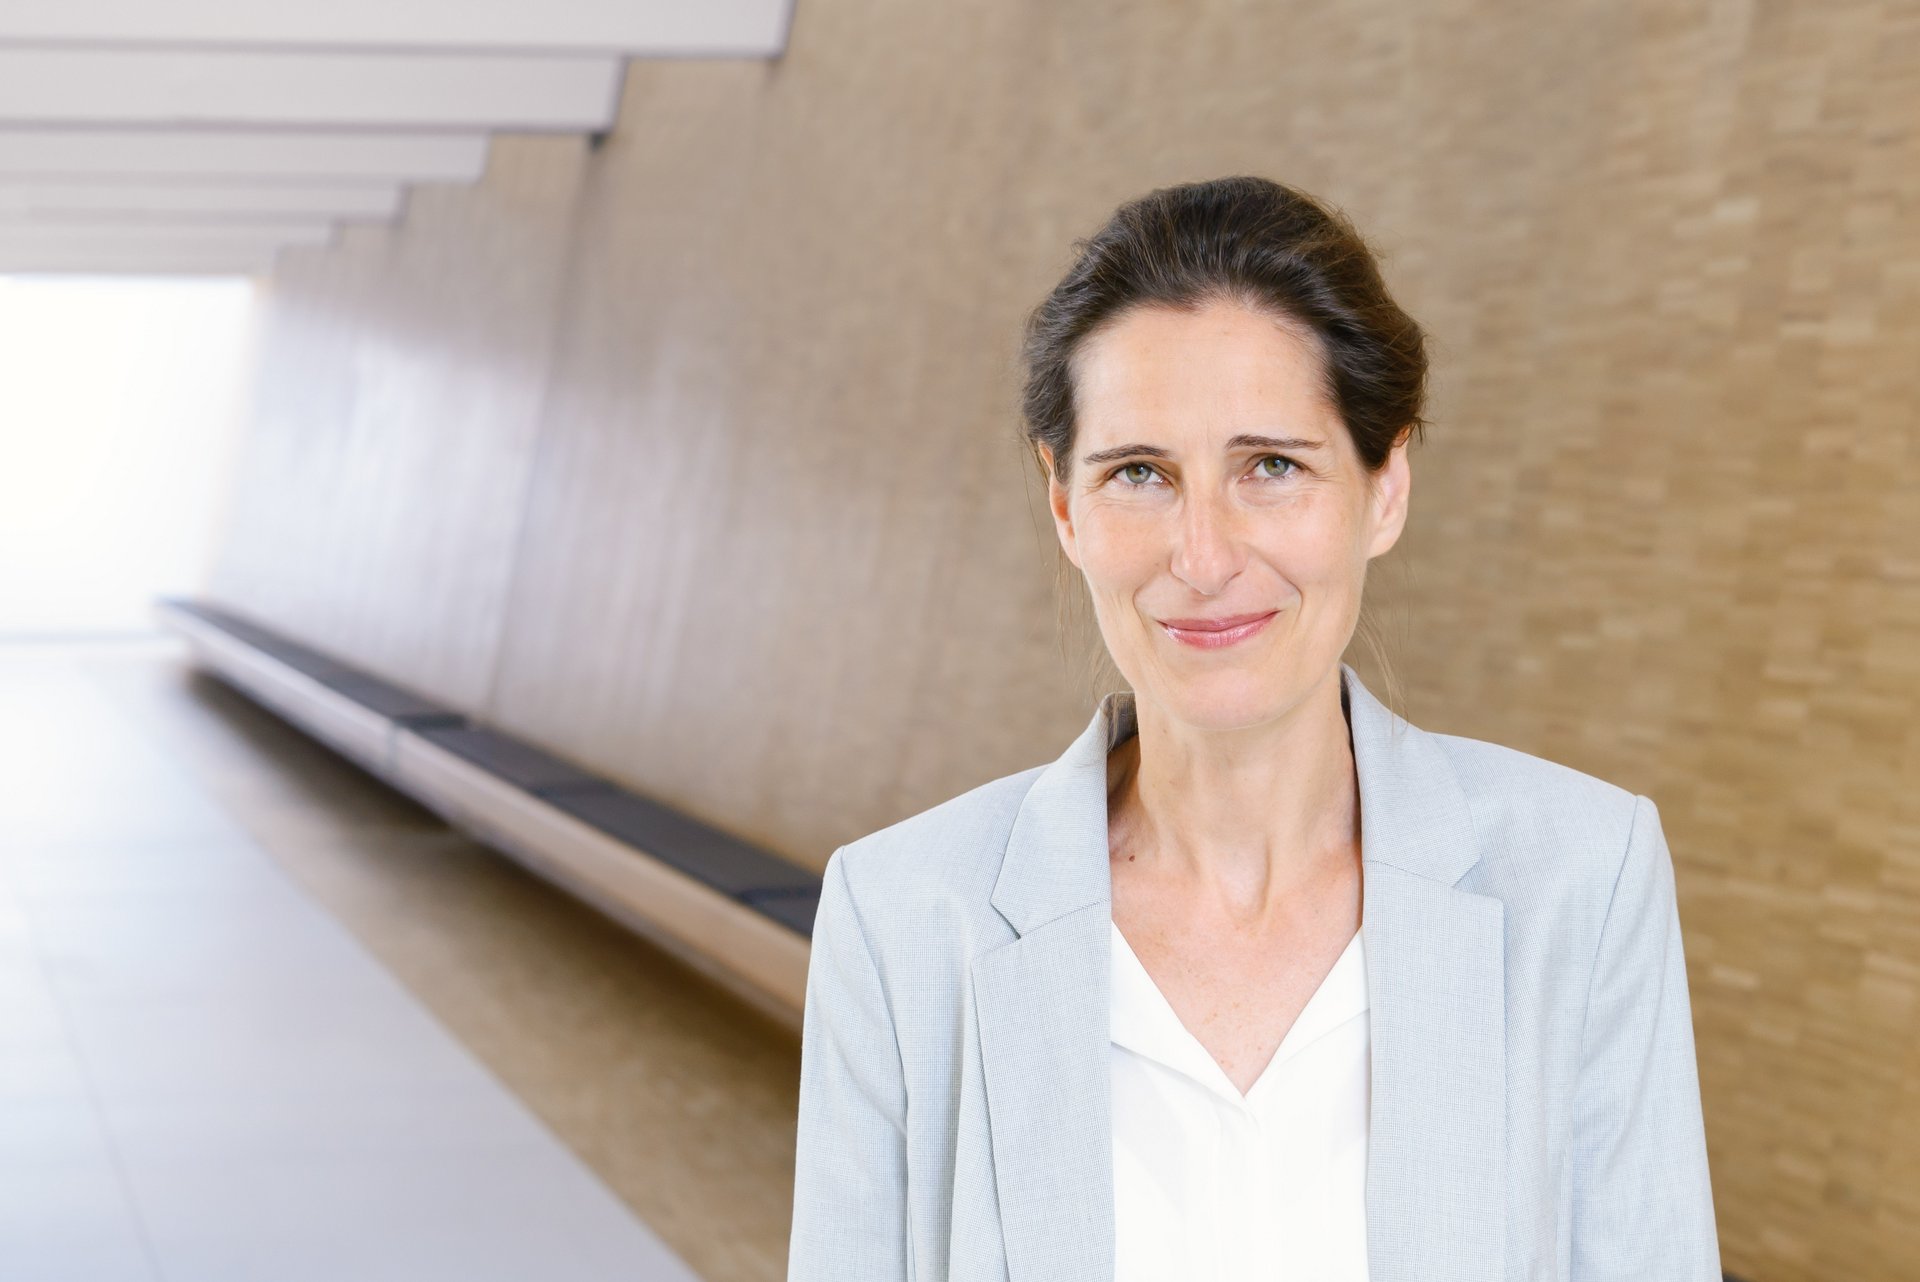 Univ.-Prof. Dr. med. Claudia Rössig, Stellvertretende Ärztliche Direktorin